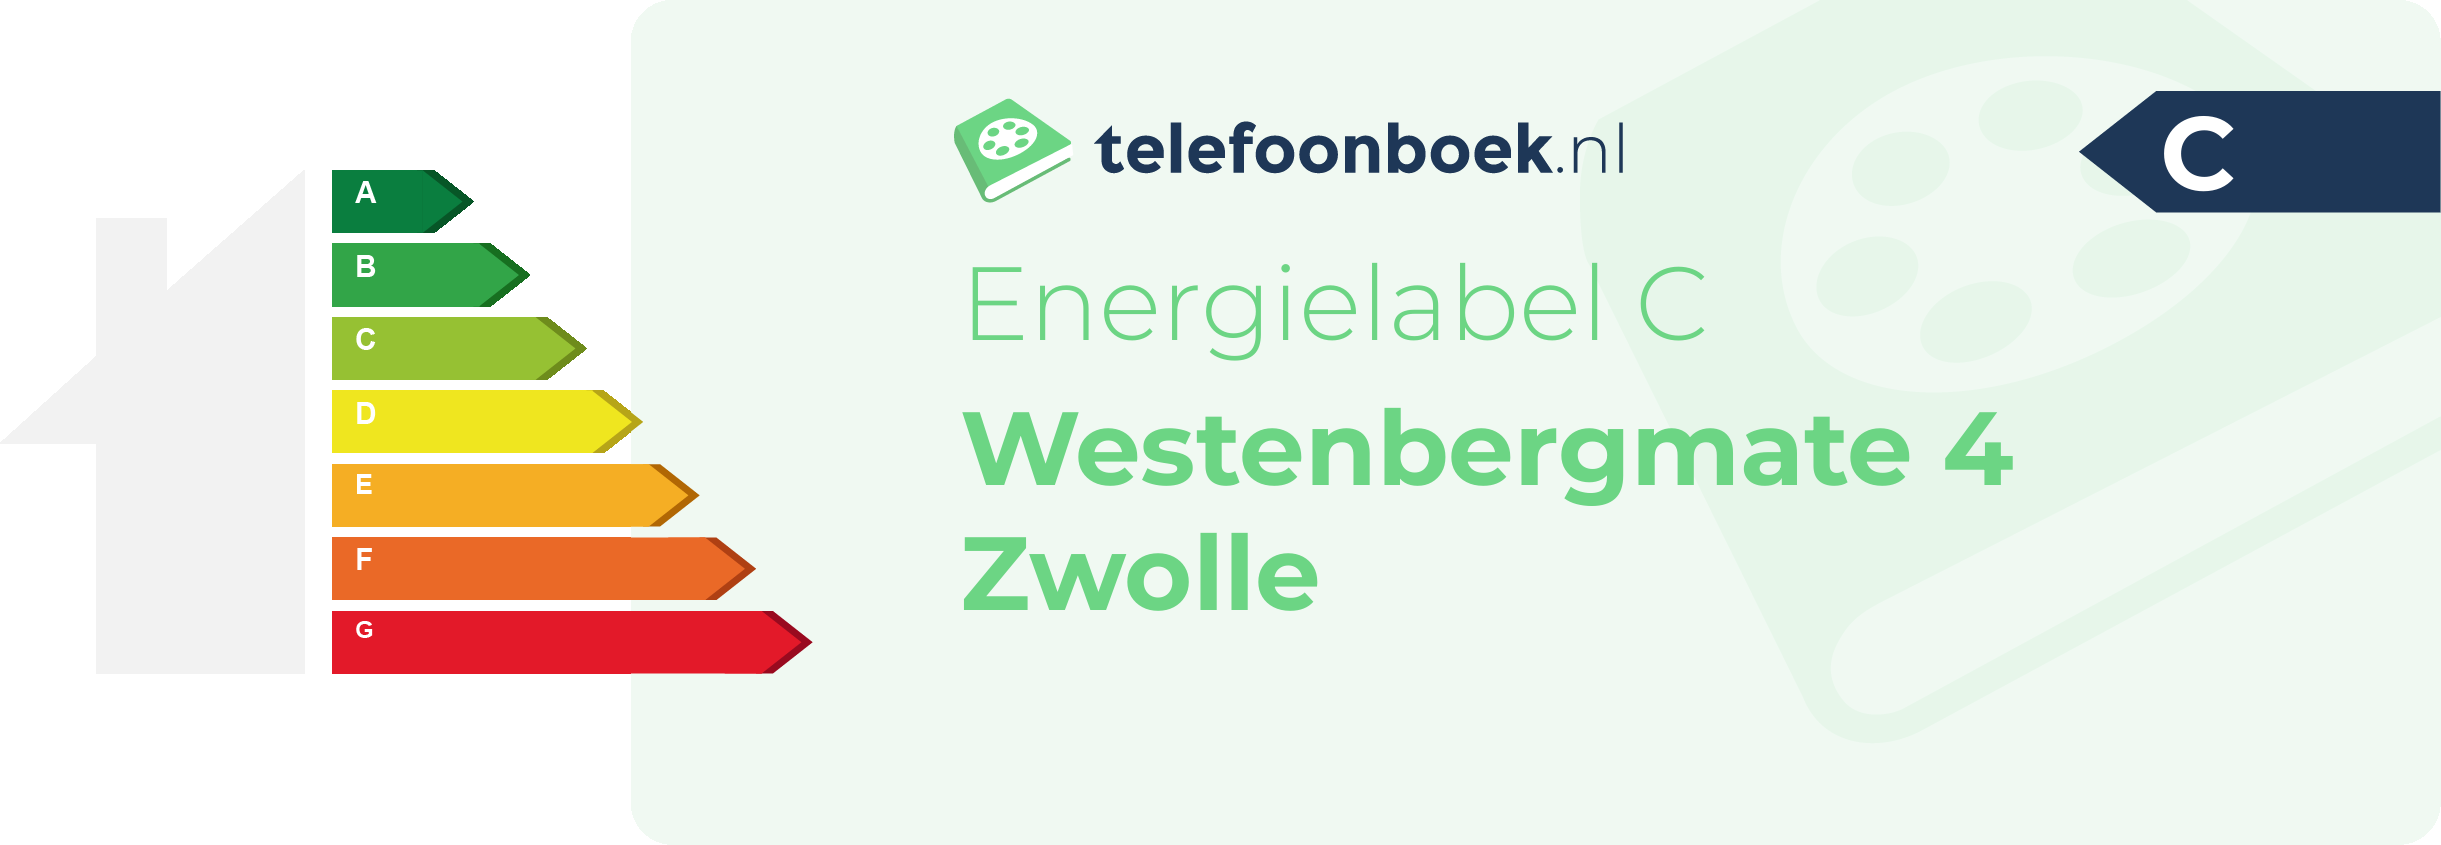 Energielabel Westenbergmate 4 Zwolle